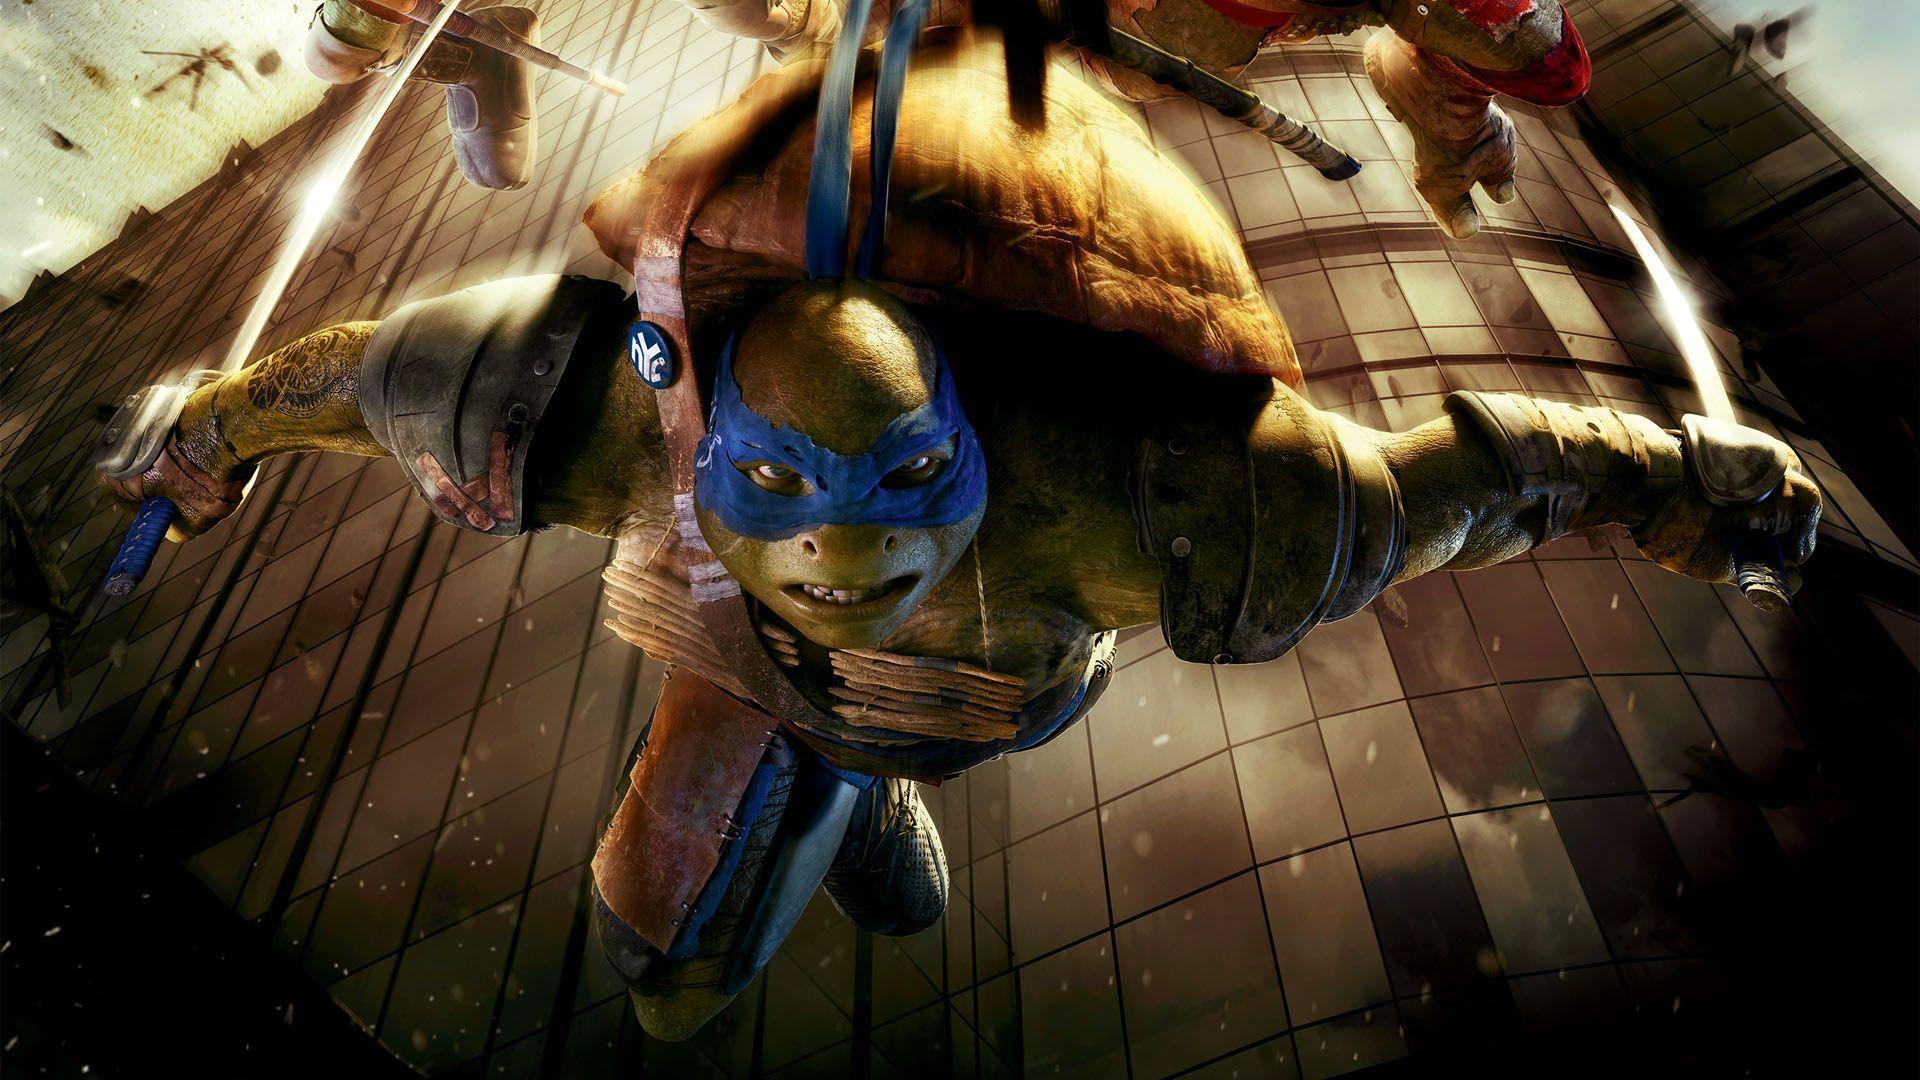 Teenage Mutant Ninja Turtles in action